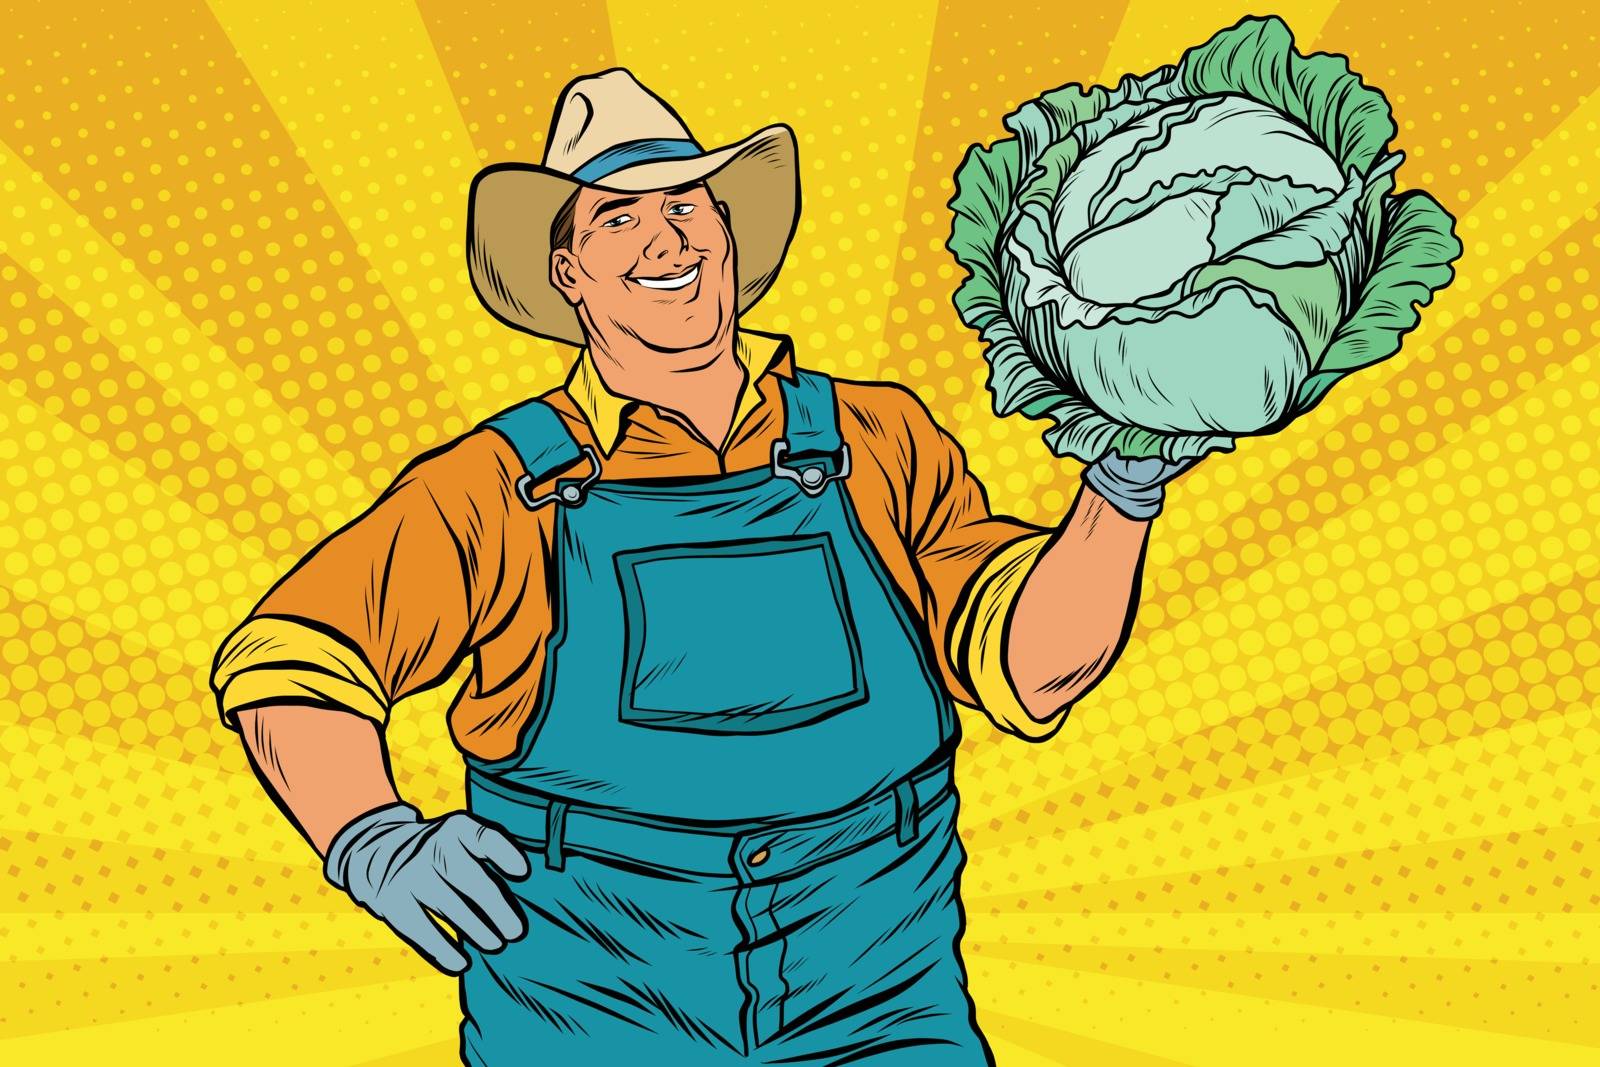 Rural retro farmer and a head of green cabbage, pop art vector illustration